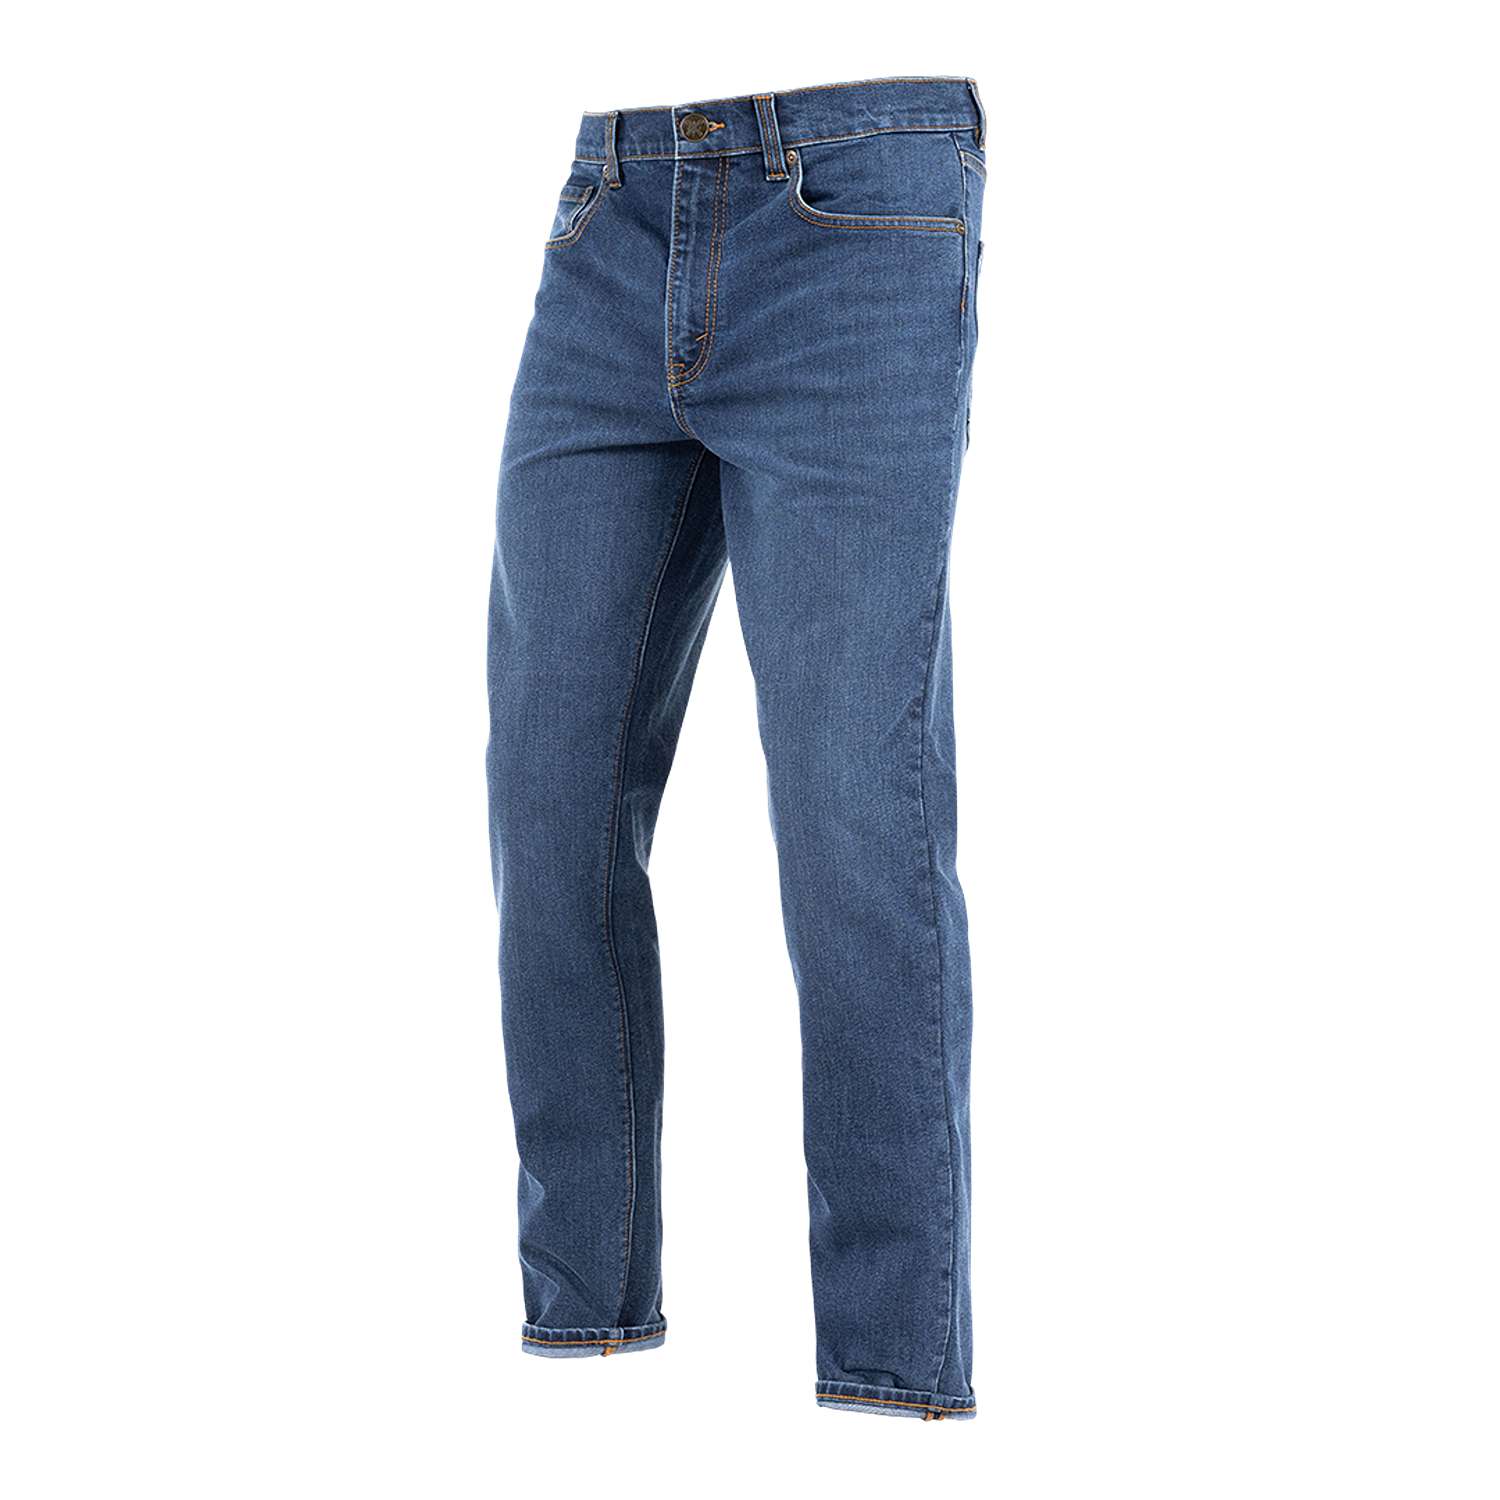 Image of John Doe Classic Tapered Jeans Indigo Size W34/L32 ID 4250553247001